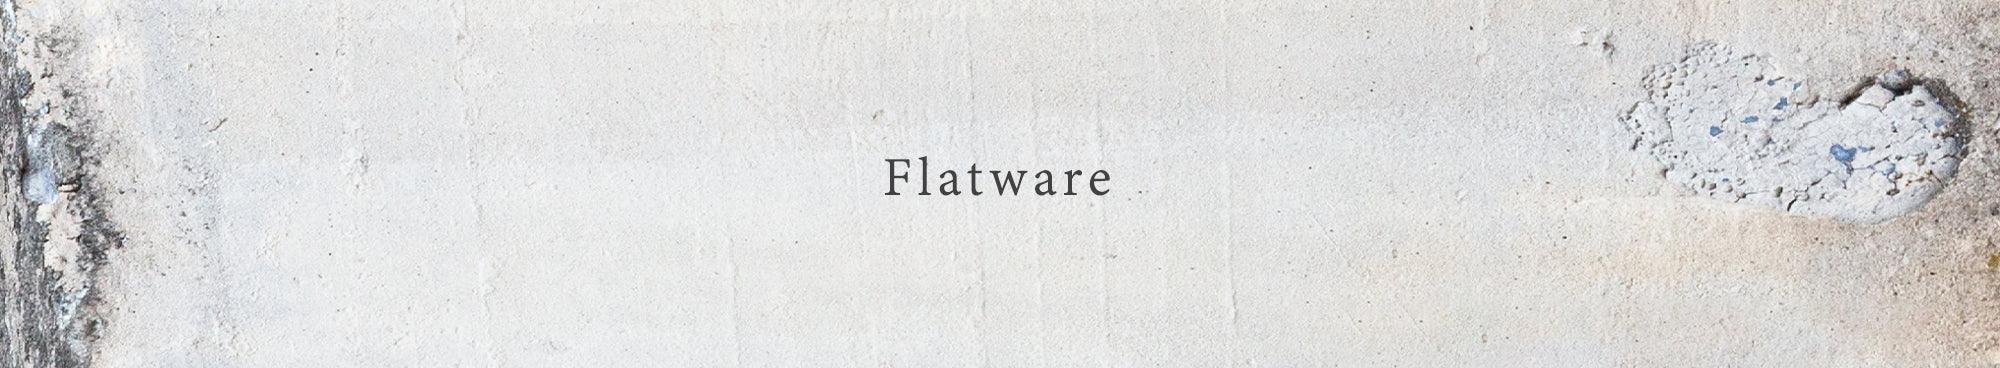 Flatware - Rikumo